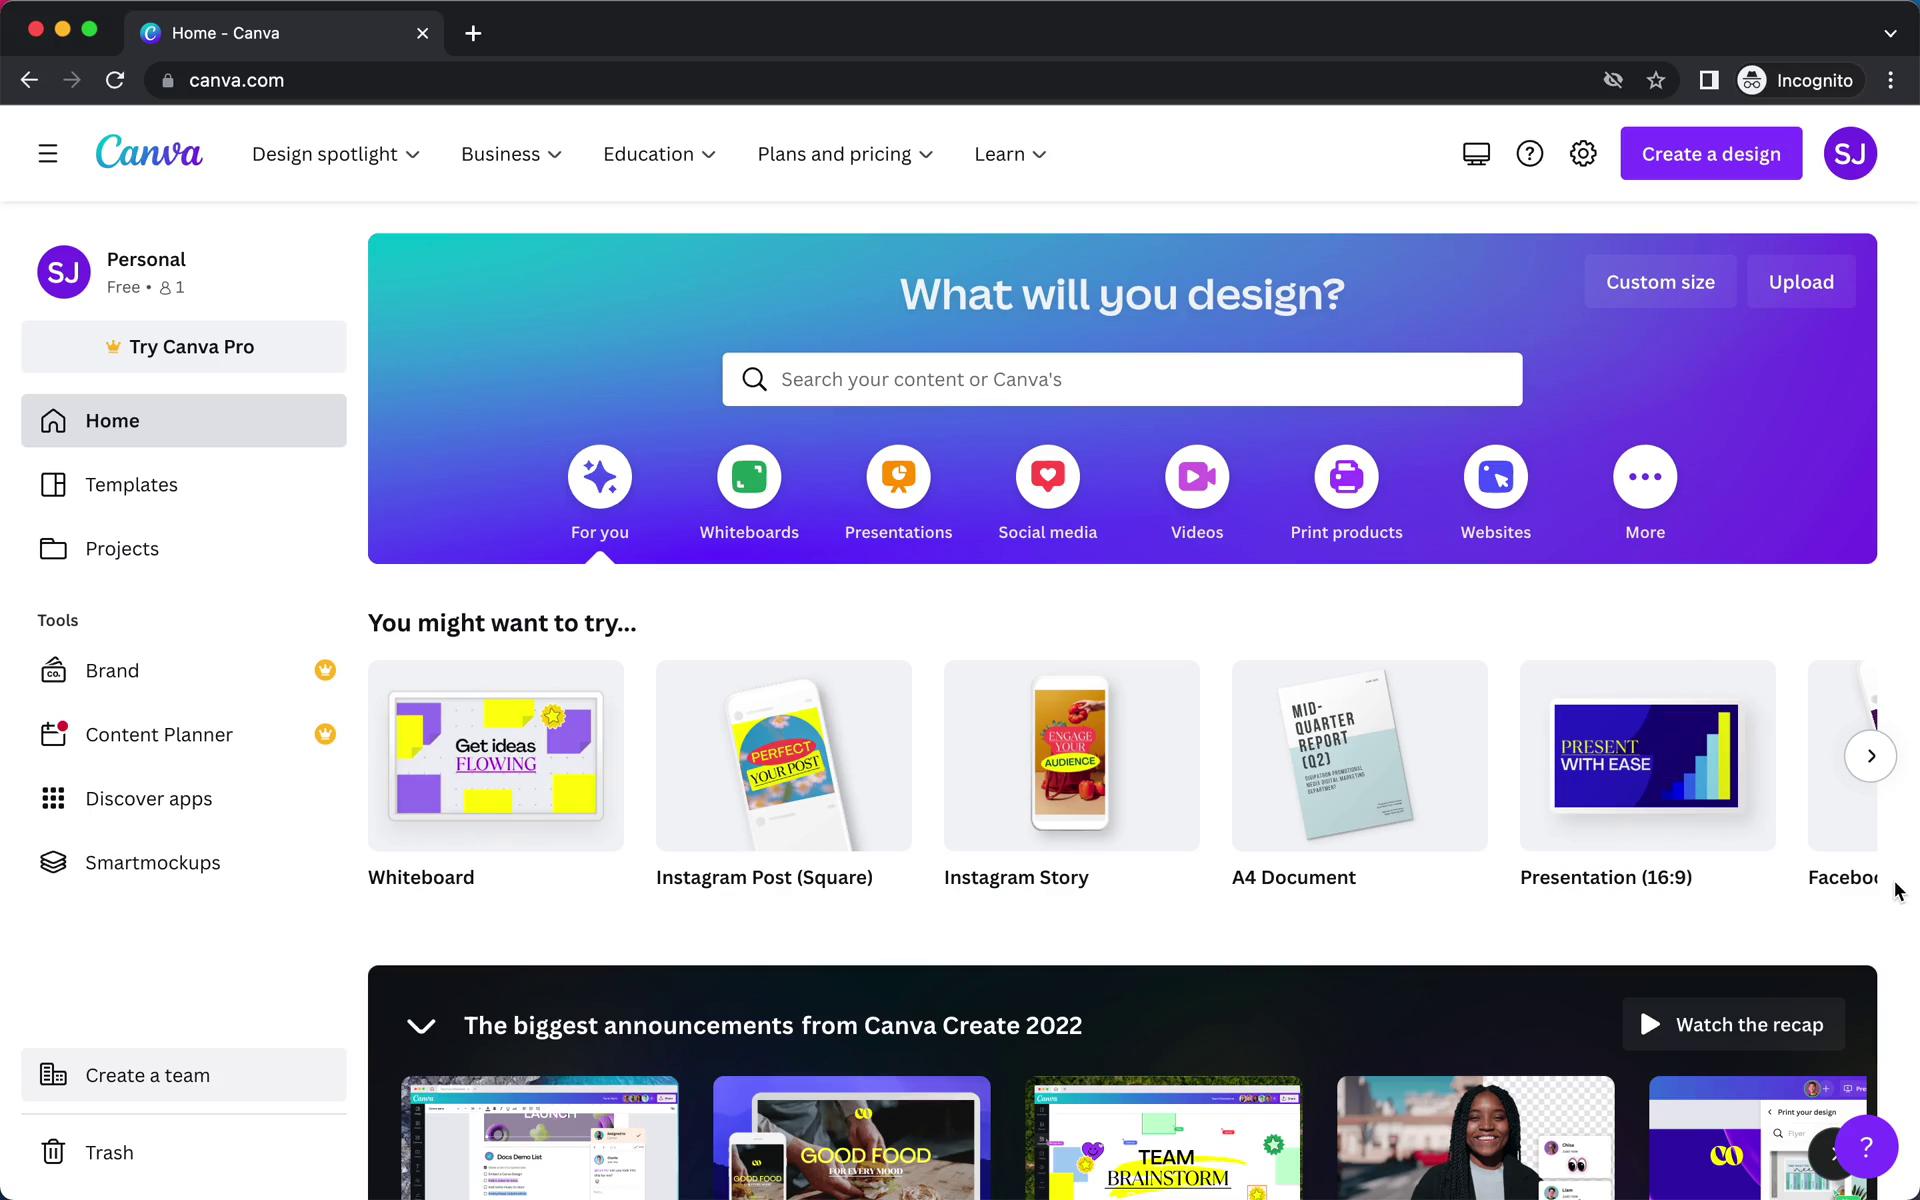 Creating a design on Canva video screenshot